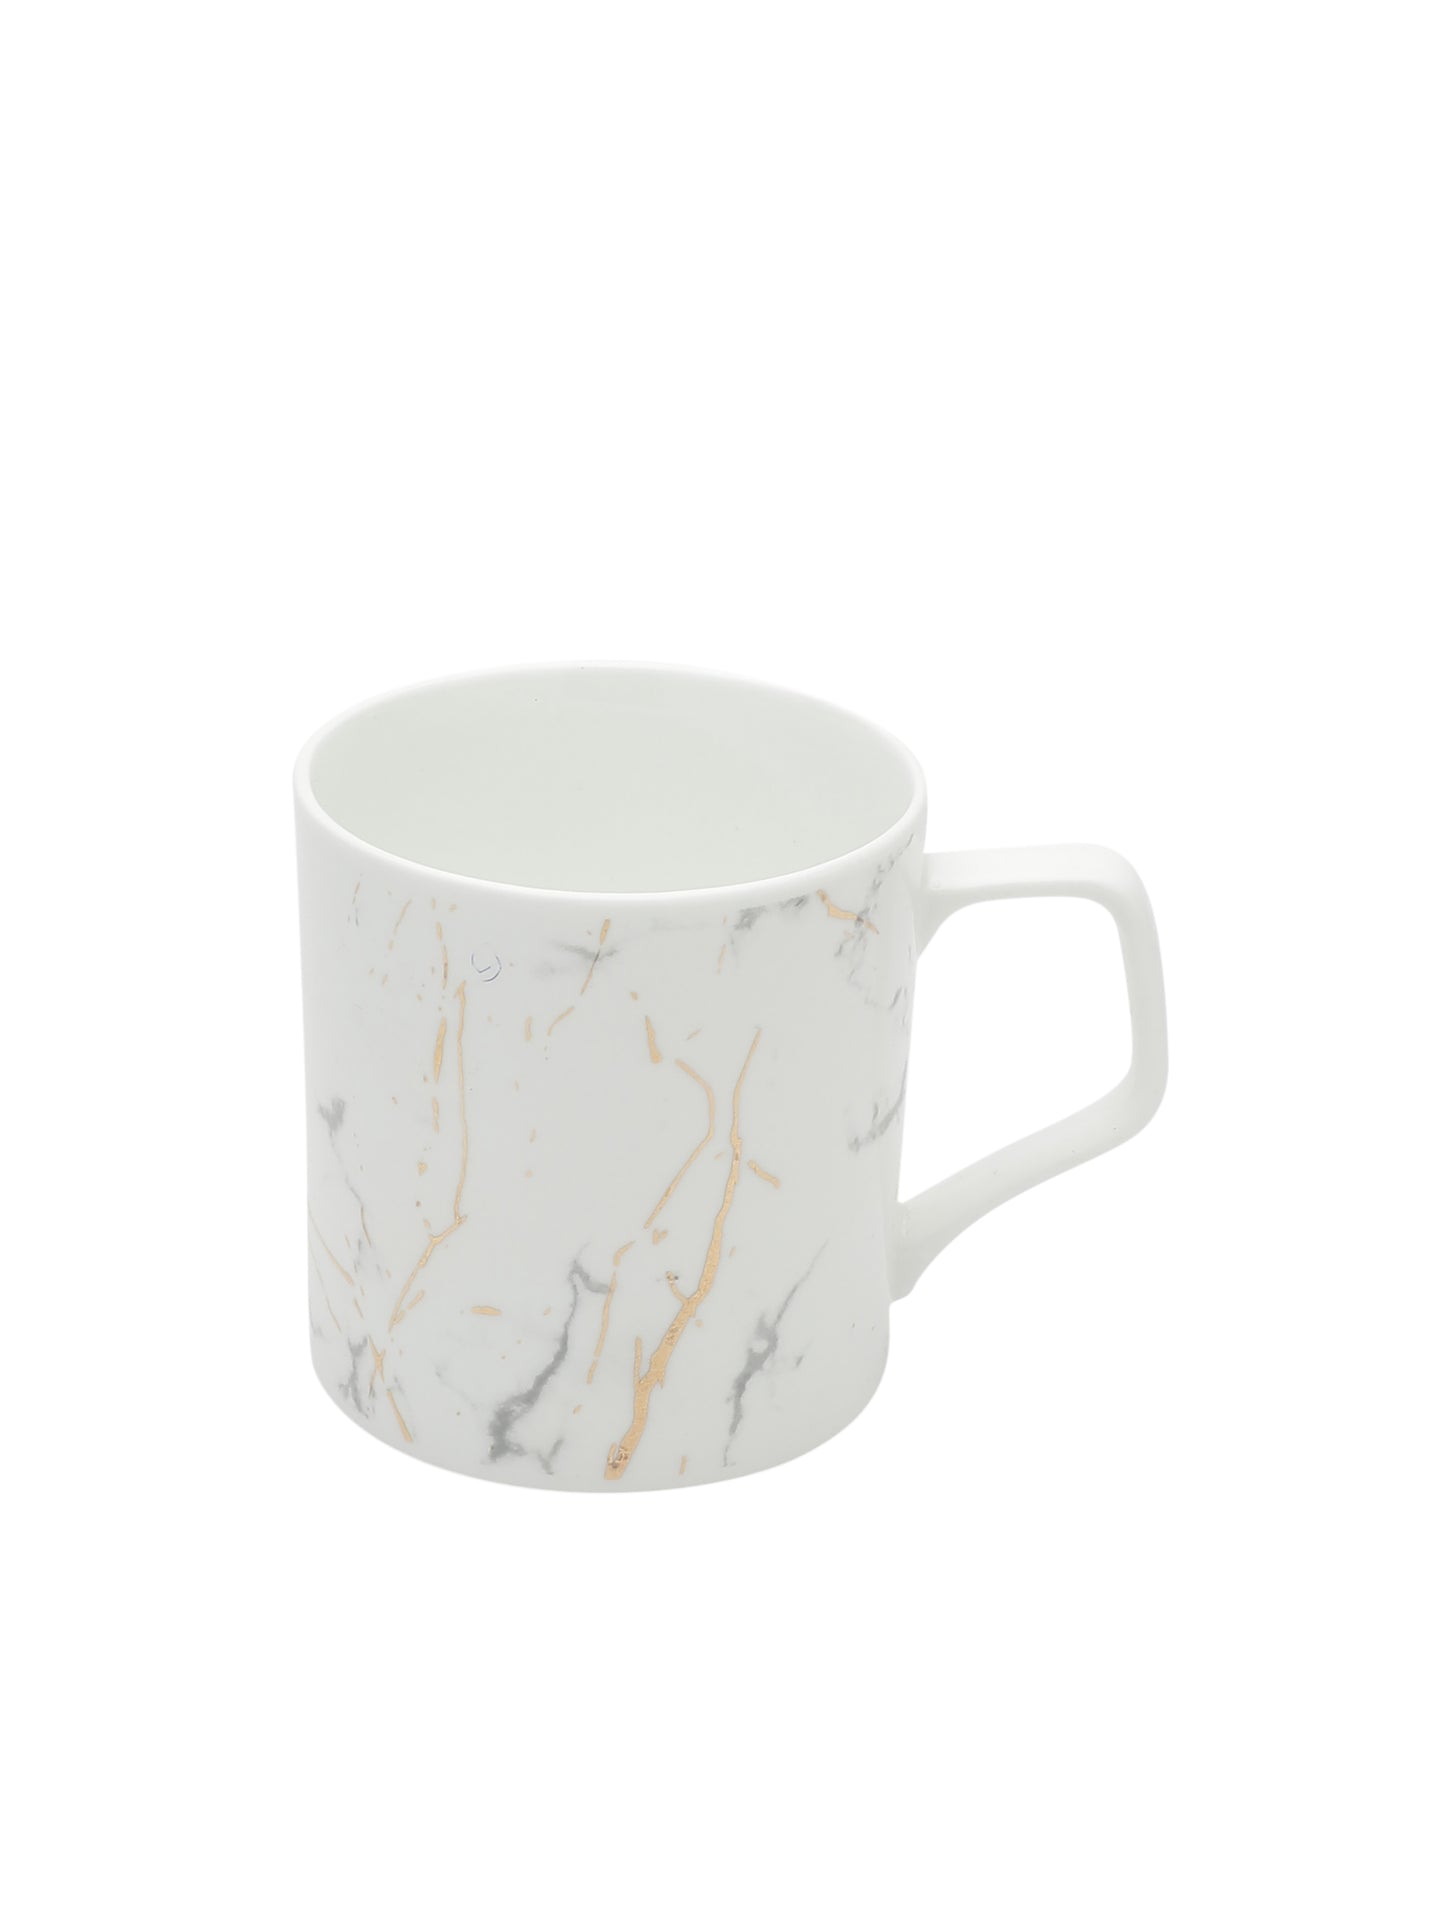 Director Marble Monochrome White Gold Coffee & Tea Mugs, 220ml, Set of 6